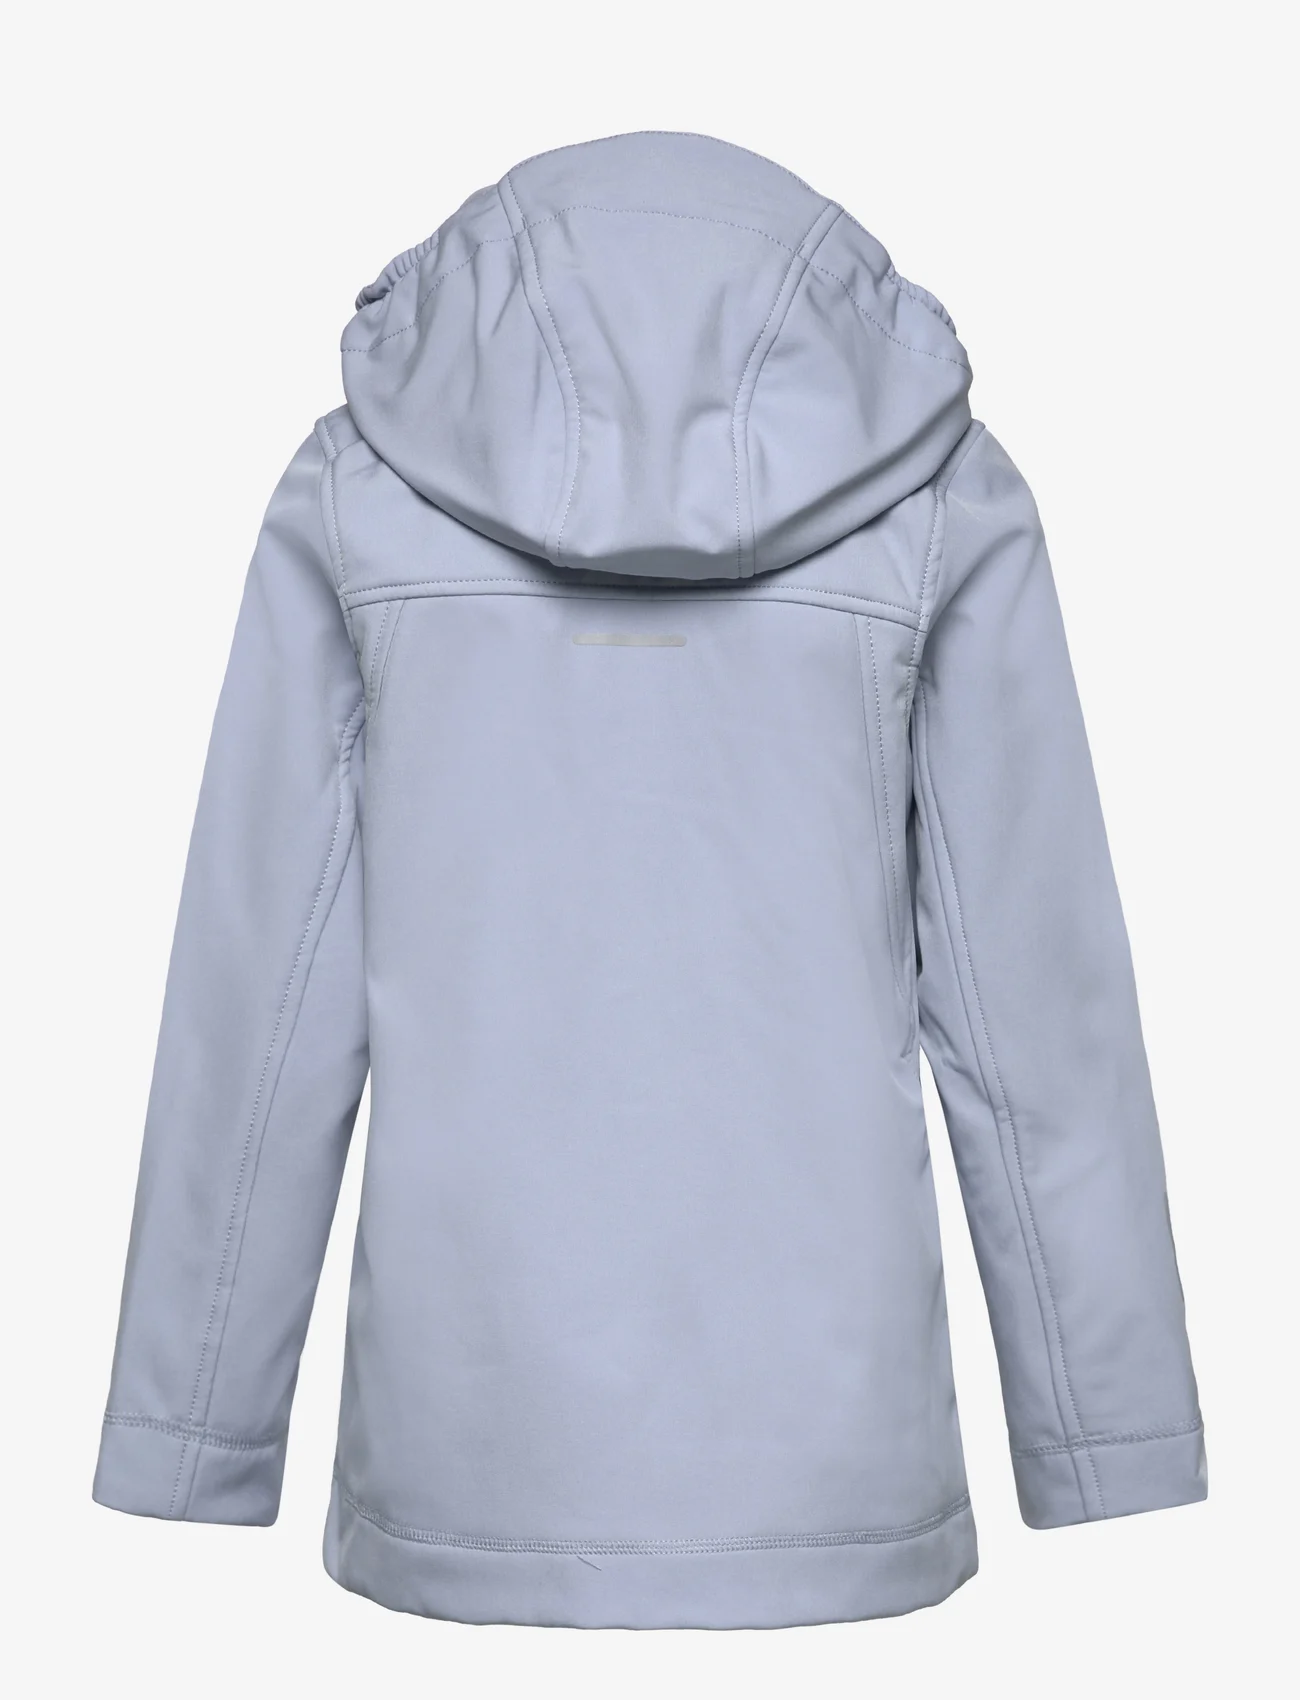 Reima - Softshell jacket, Espoo - barn - foggy blue - 1